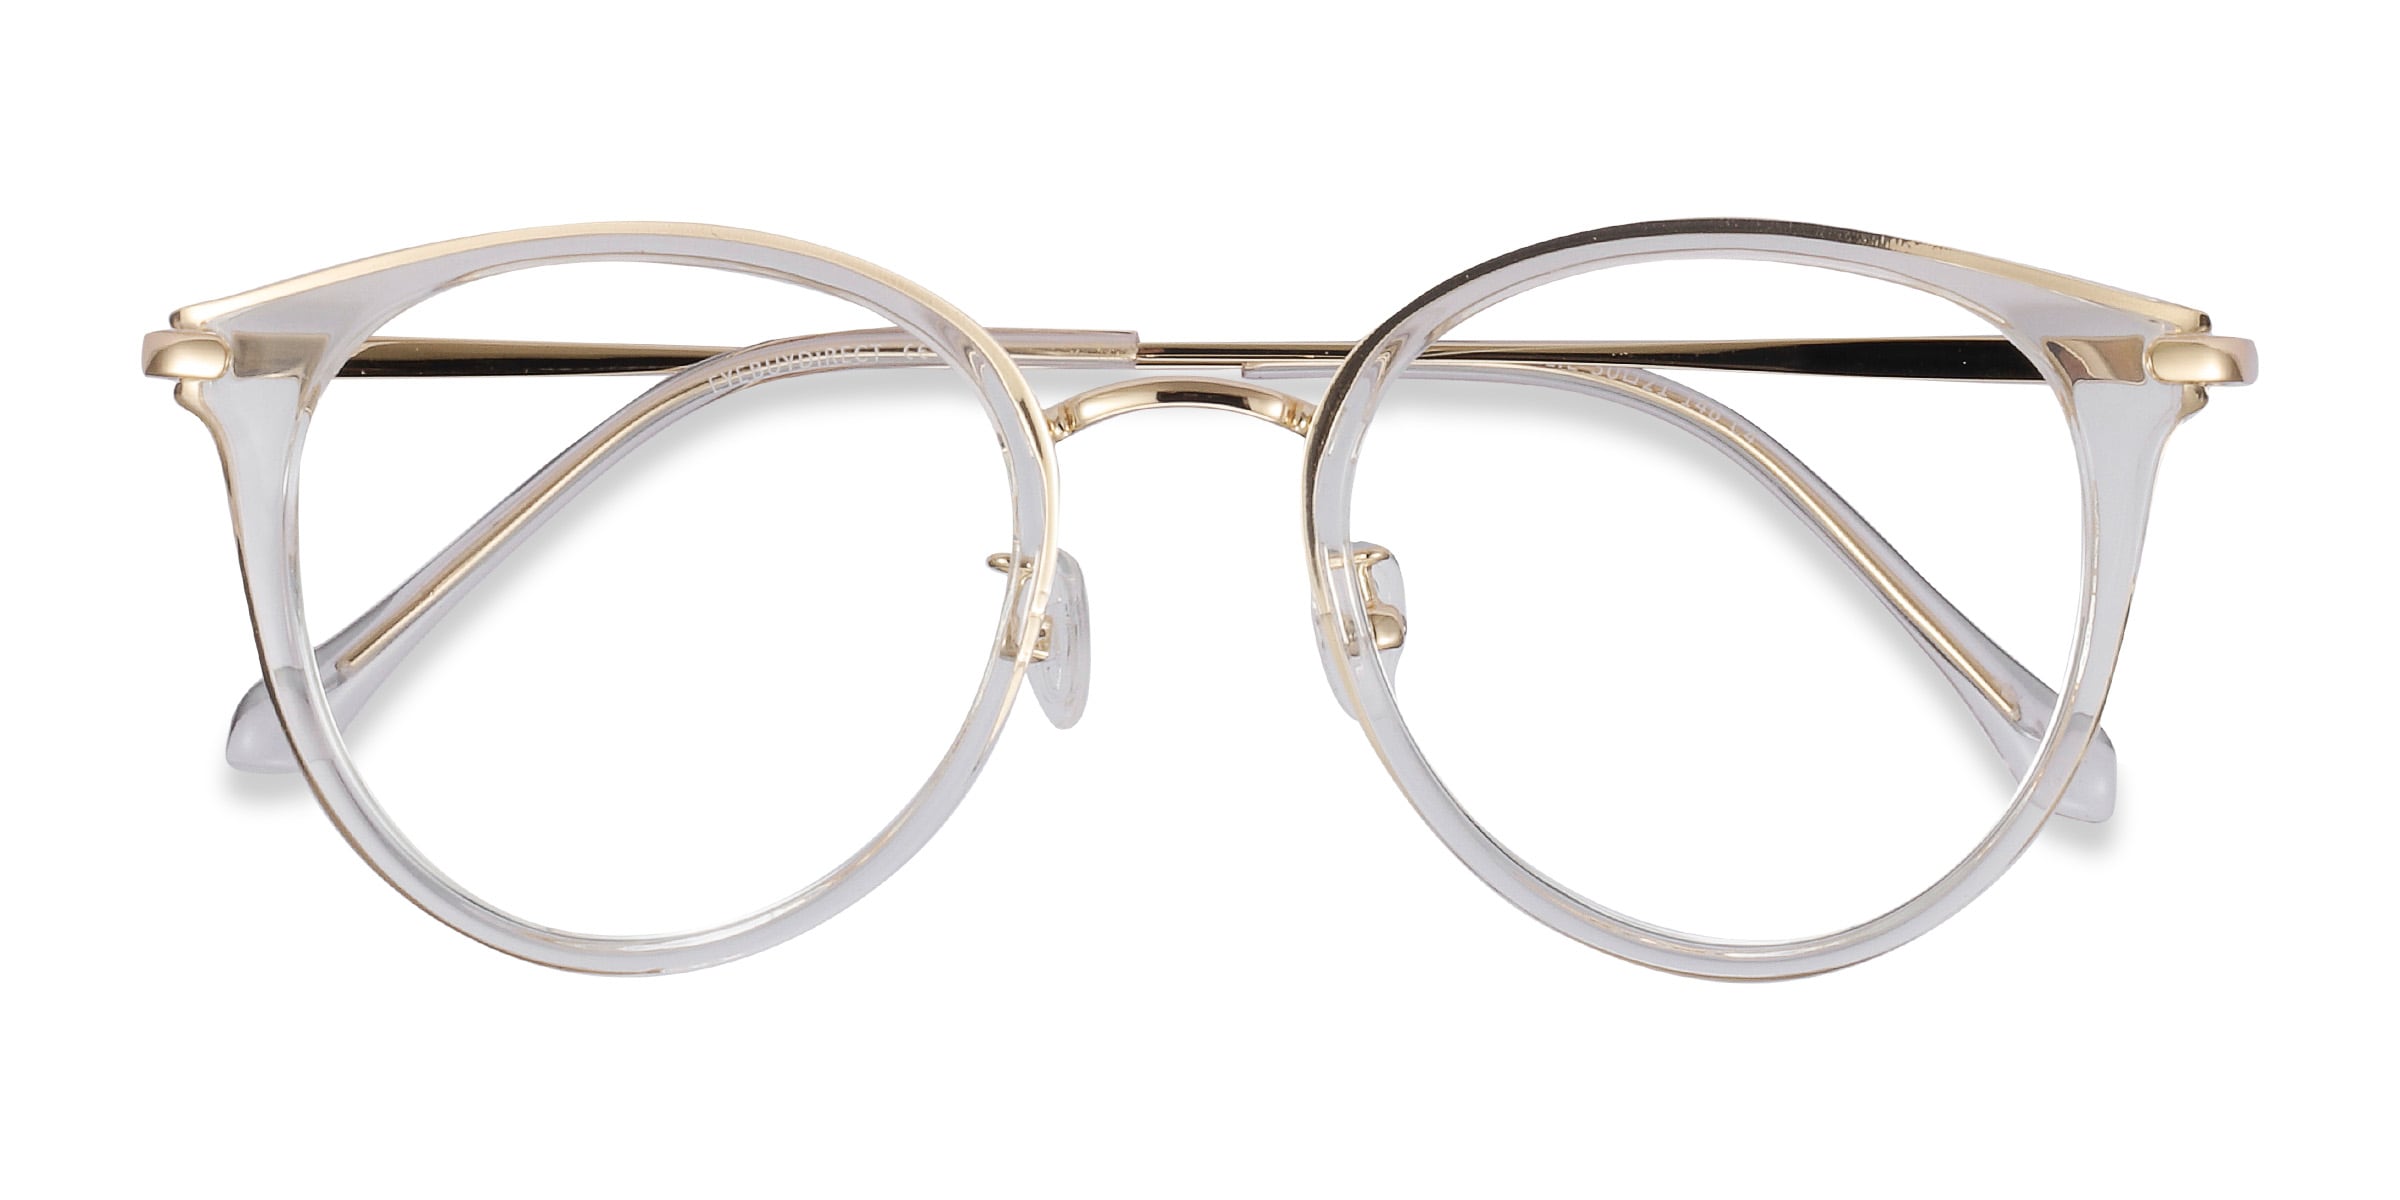 TANLANG Unisex New Non-Prescription Frame Clear Eyeglasses Men Optical Glasses Big Cat Eye Trend Polarizer Sunglasses